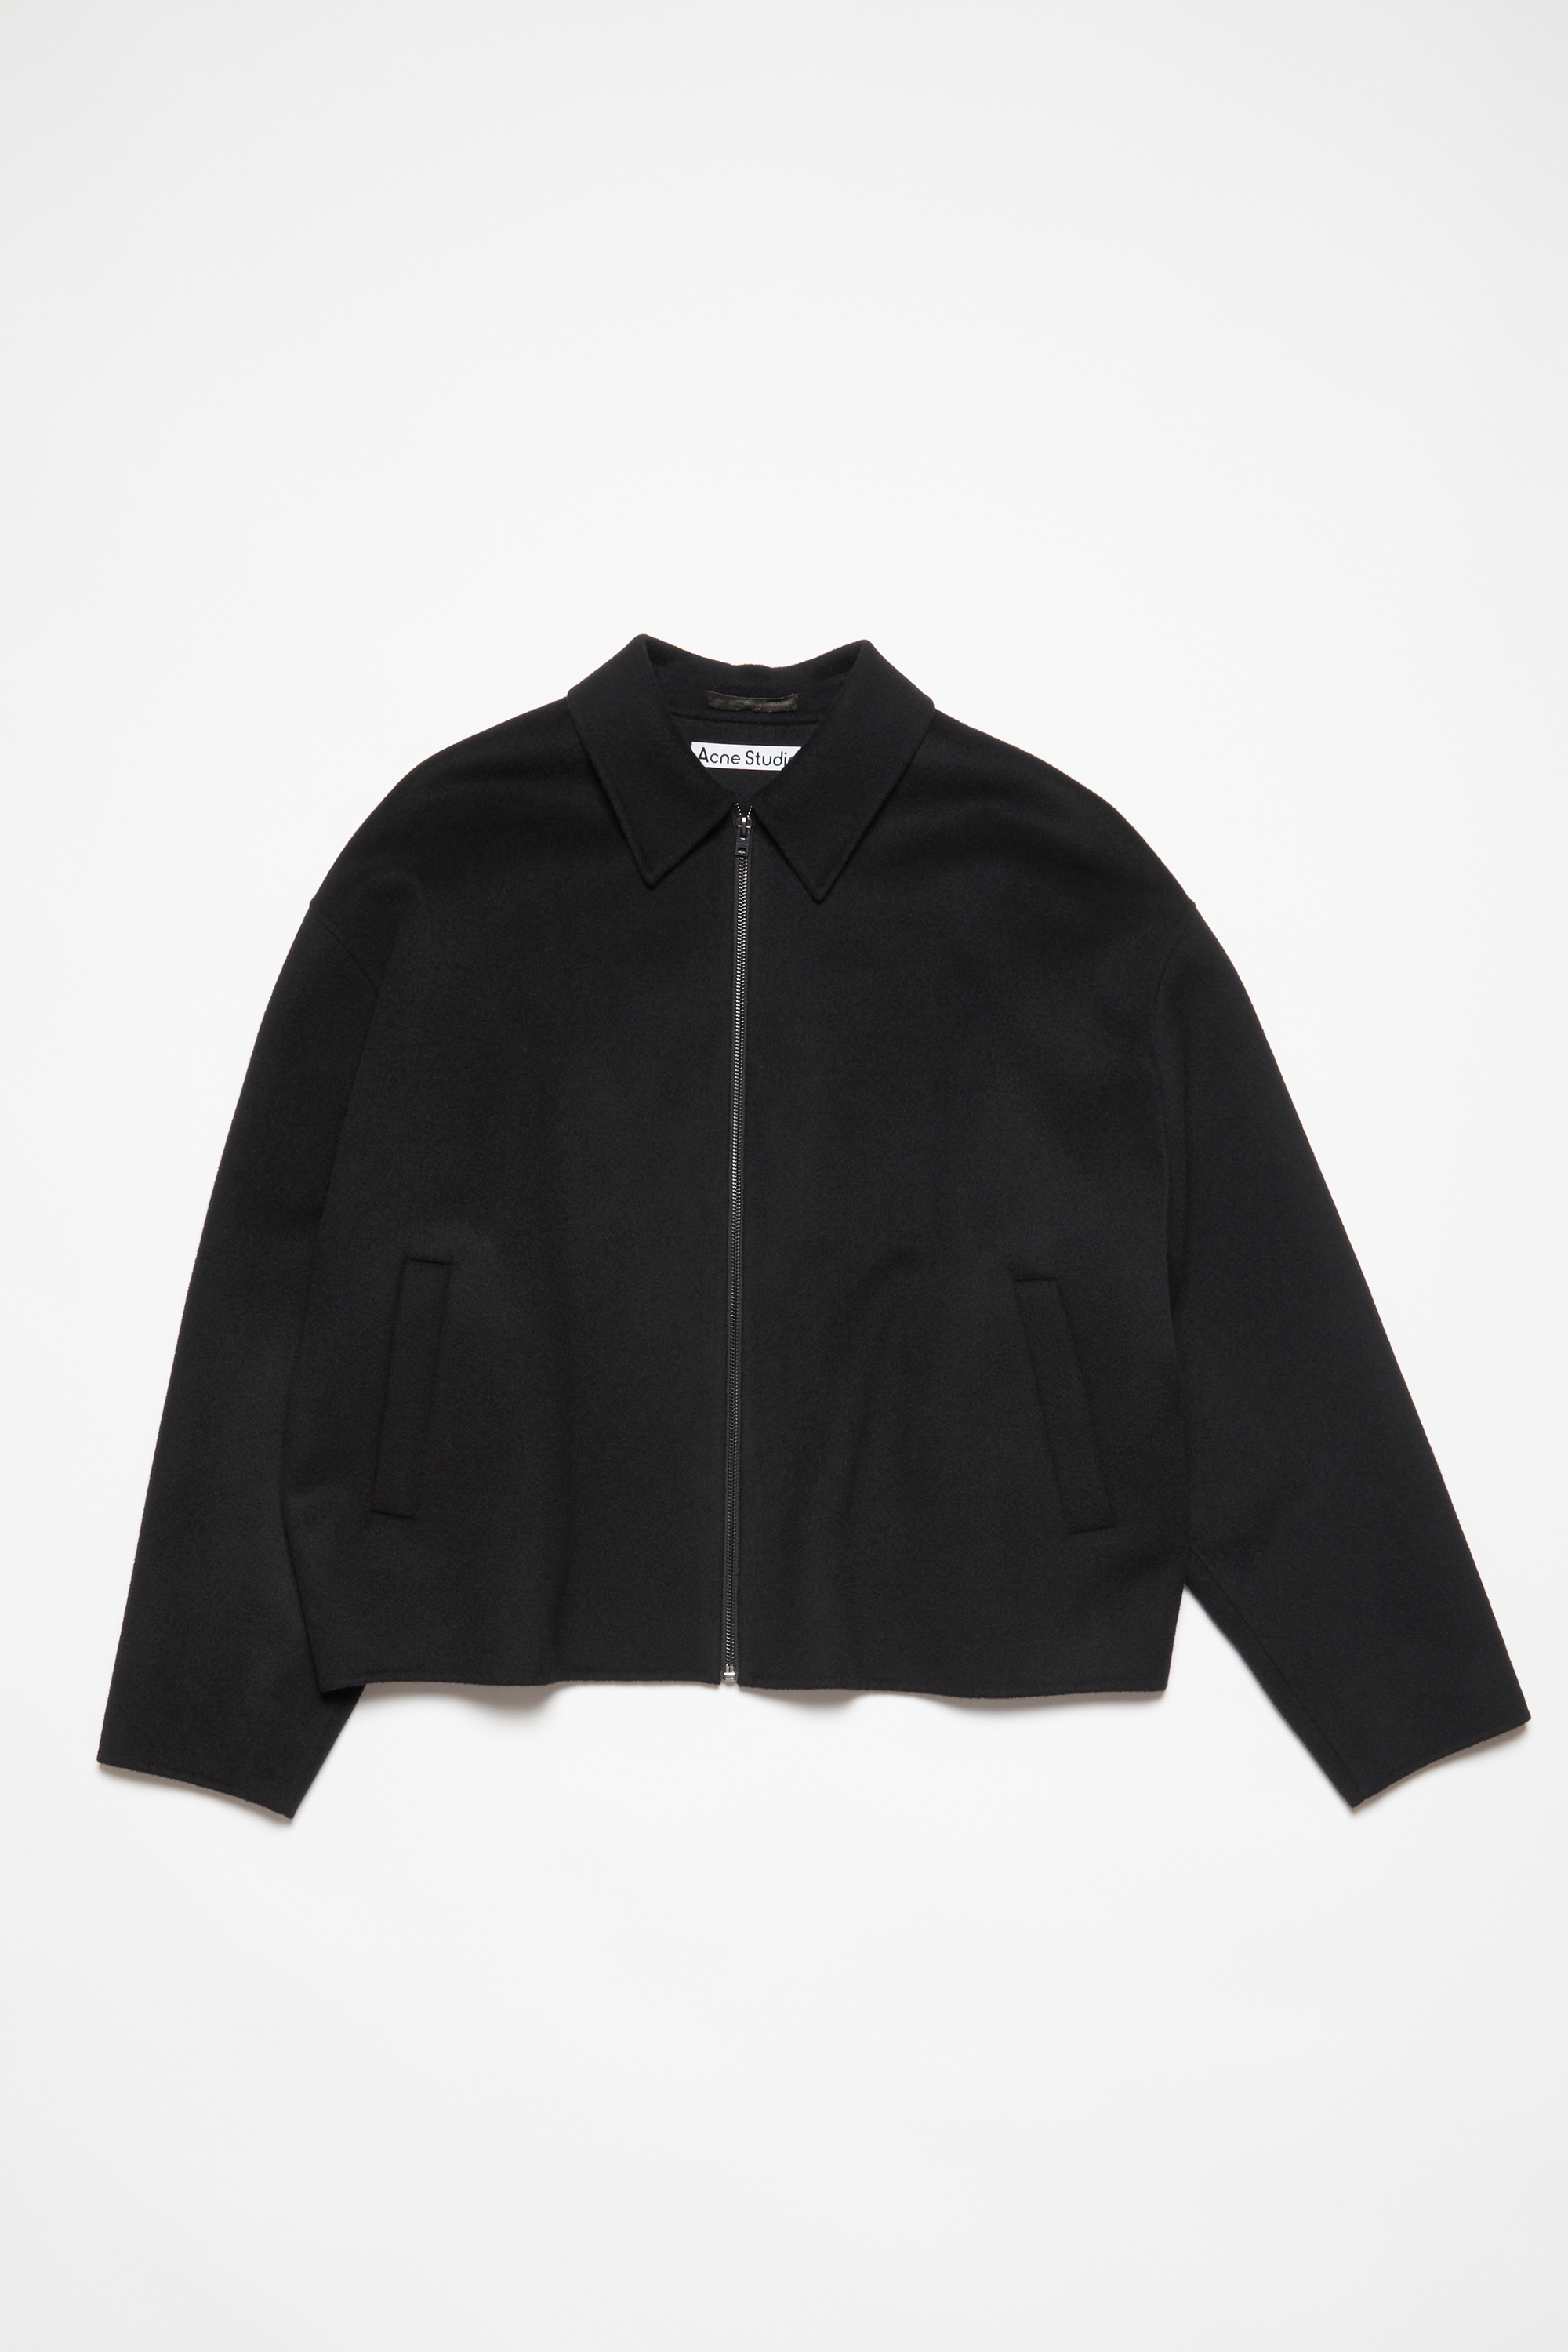 Acne Studios Wool Zipper Jacket In Black